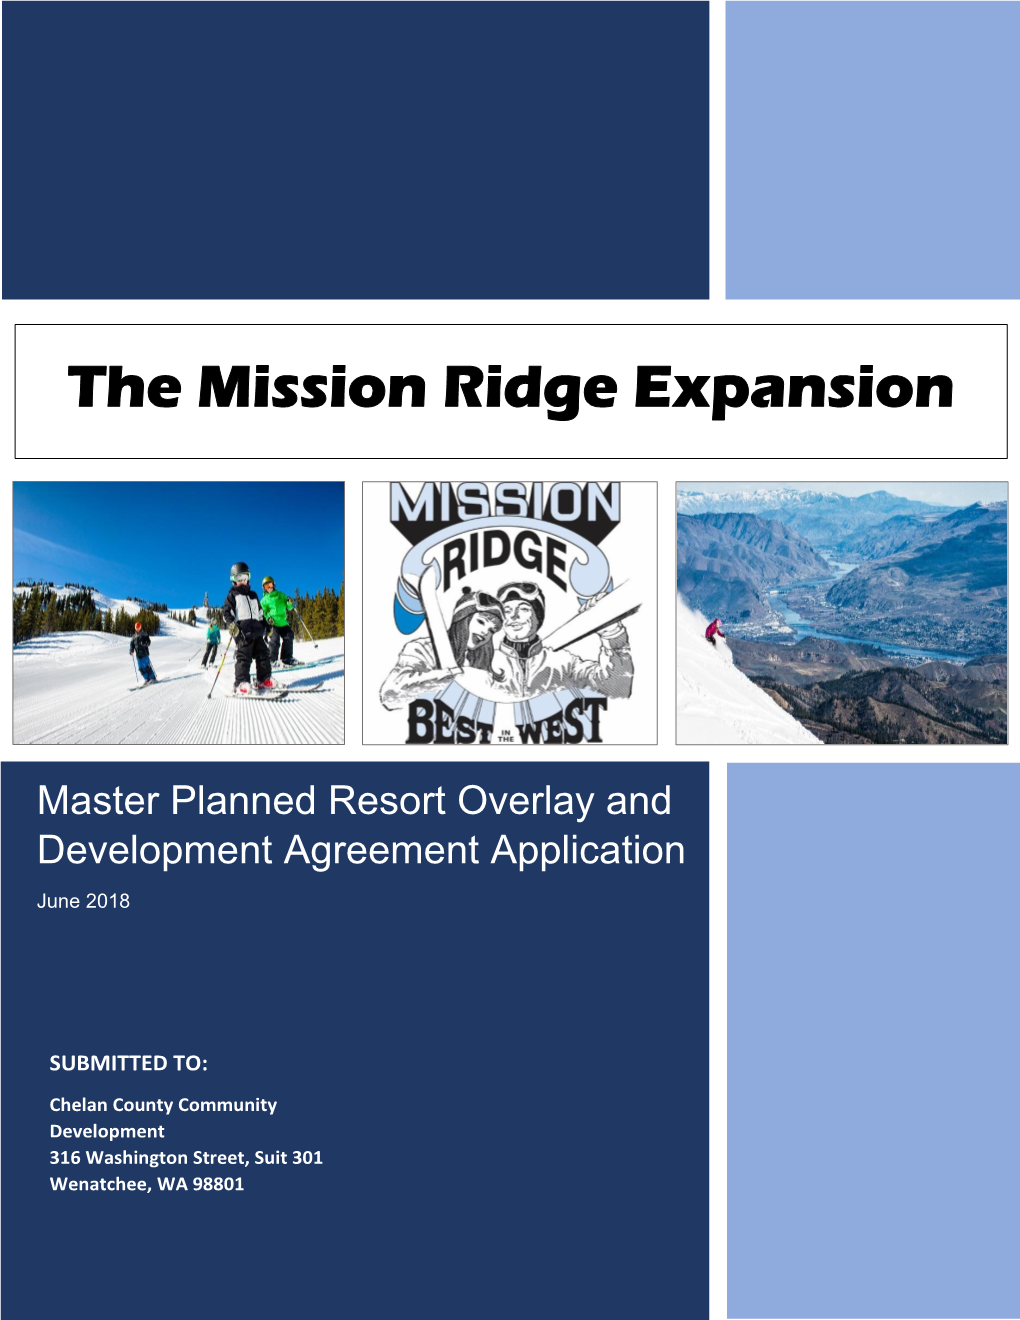 The Mission Ridge Expansion